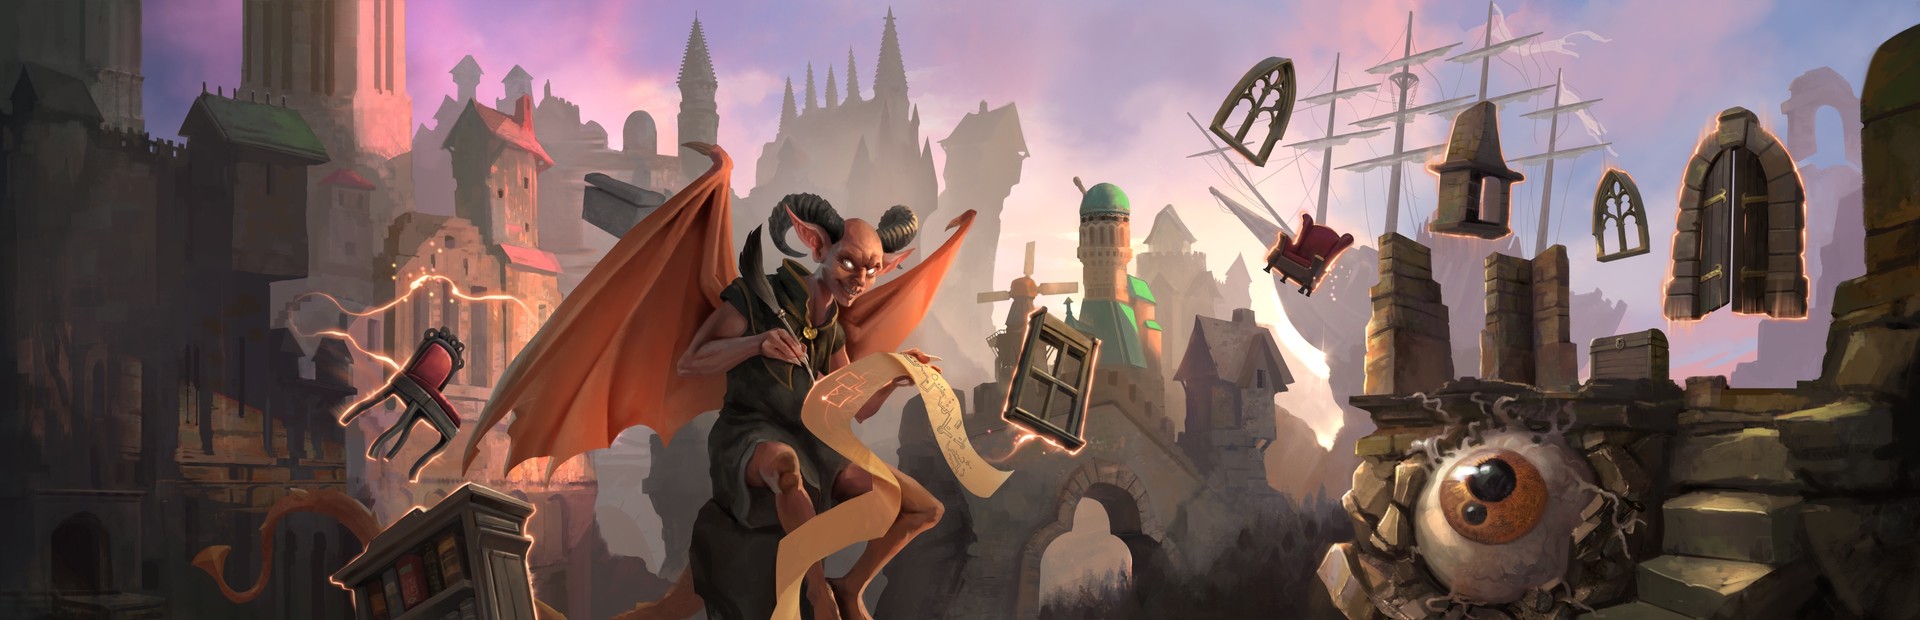 Dungeon Alchemist cover image